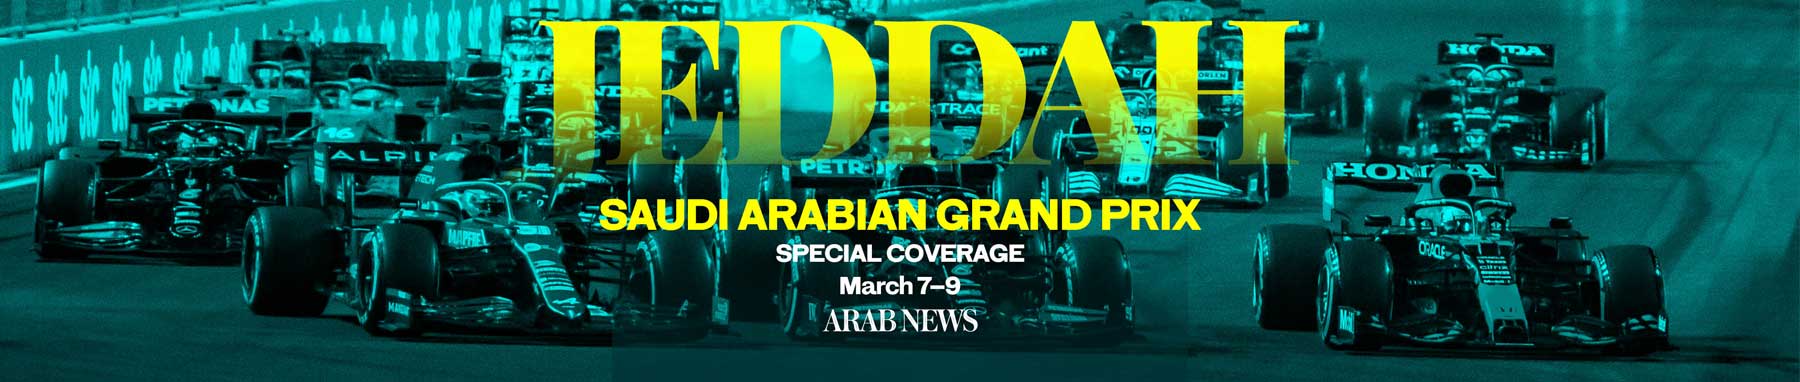 Saudi Arabian Grand Prix 2024